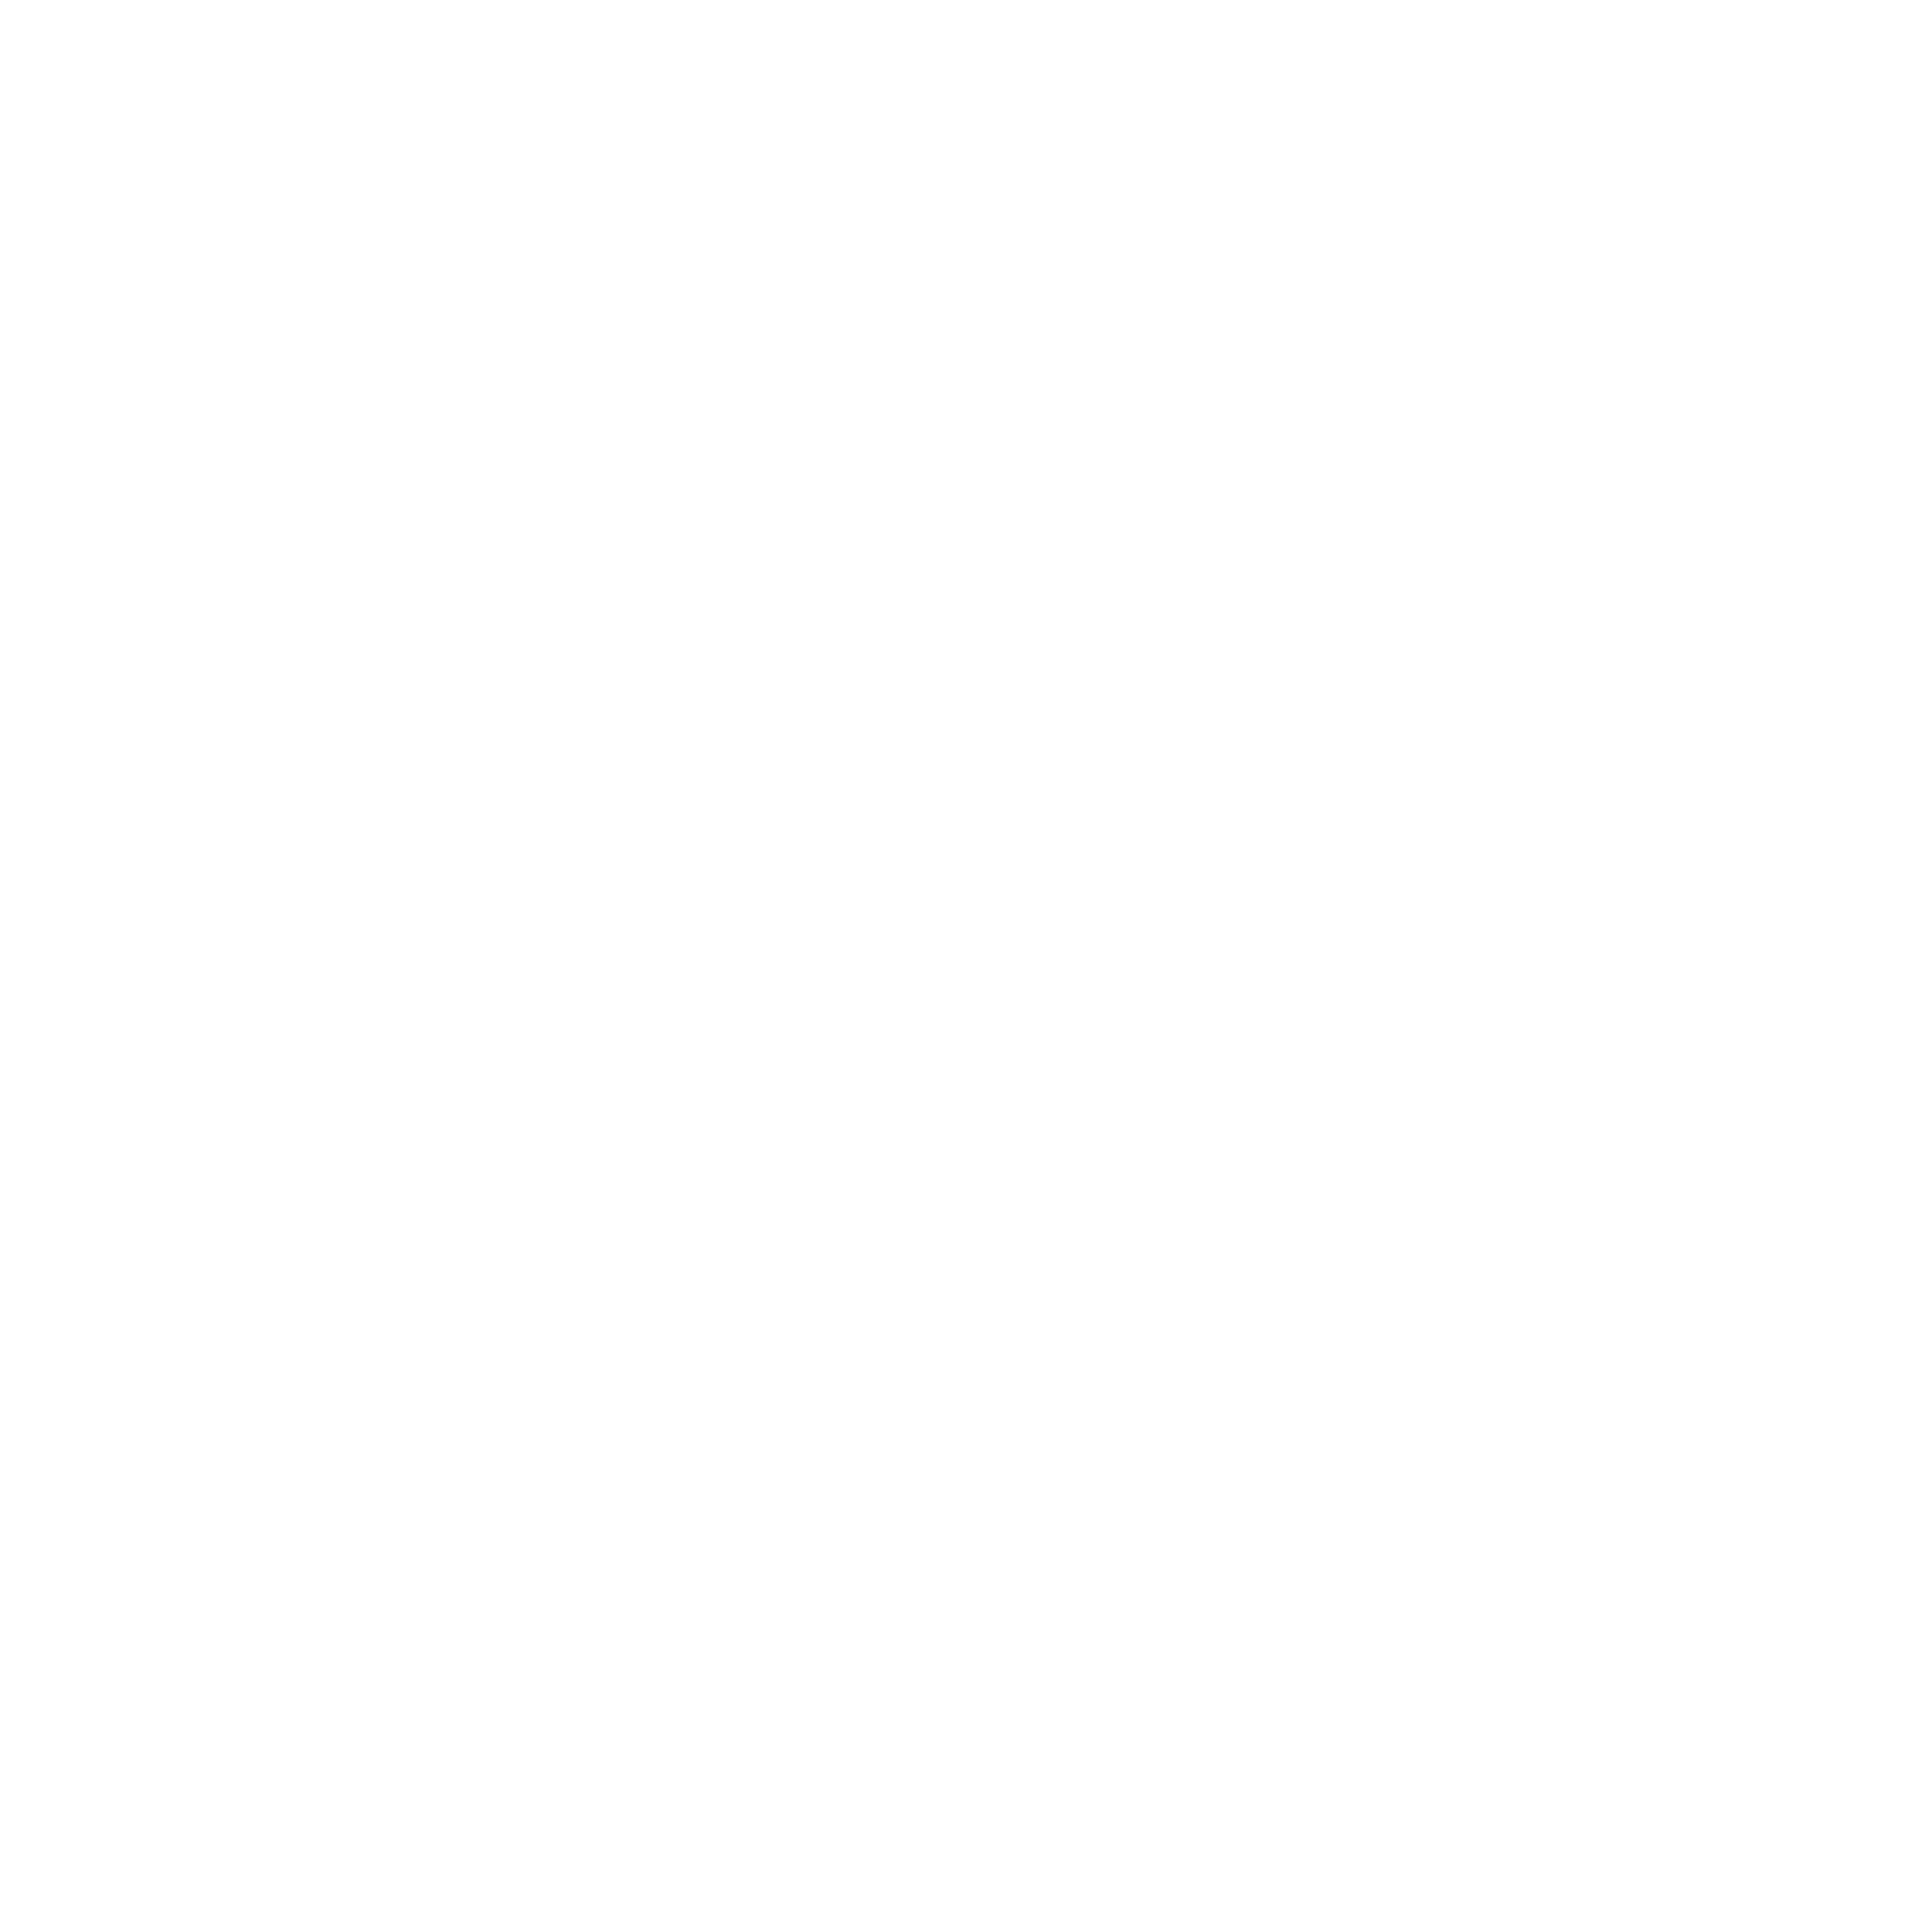 Lin-Dybner Web Studio